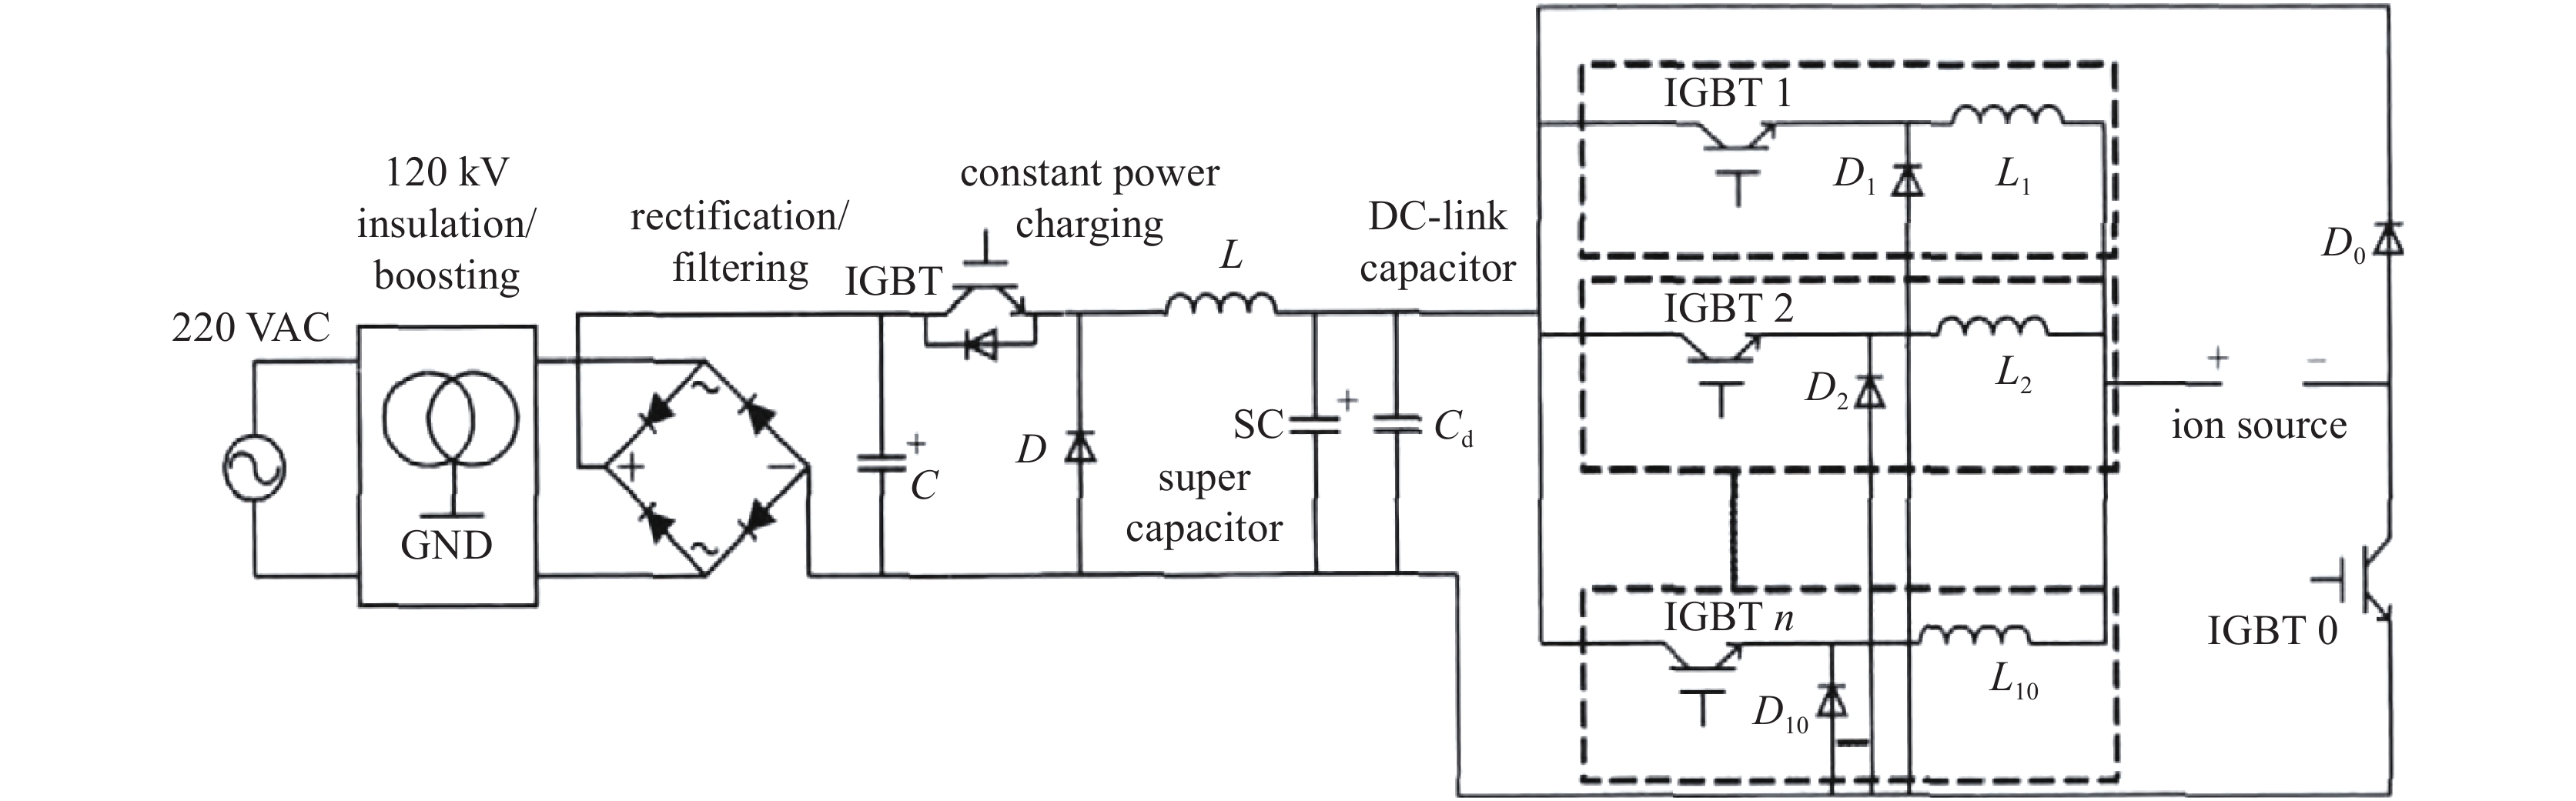 Main circuit diagram of NBI arc power supply of HL-2M